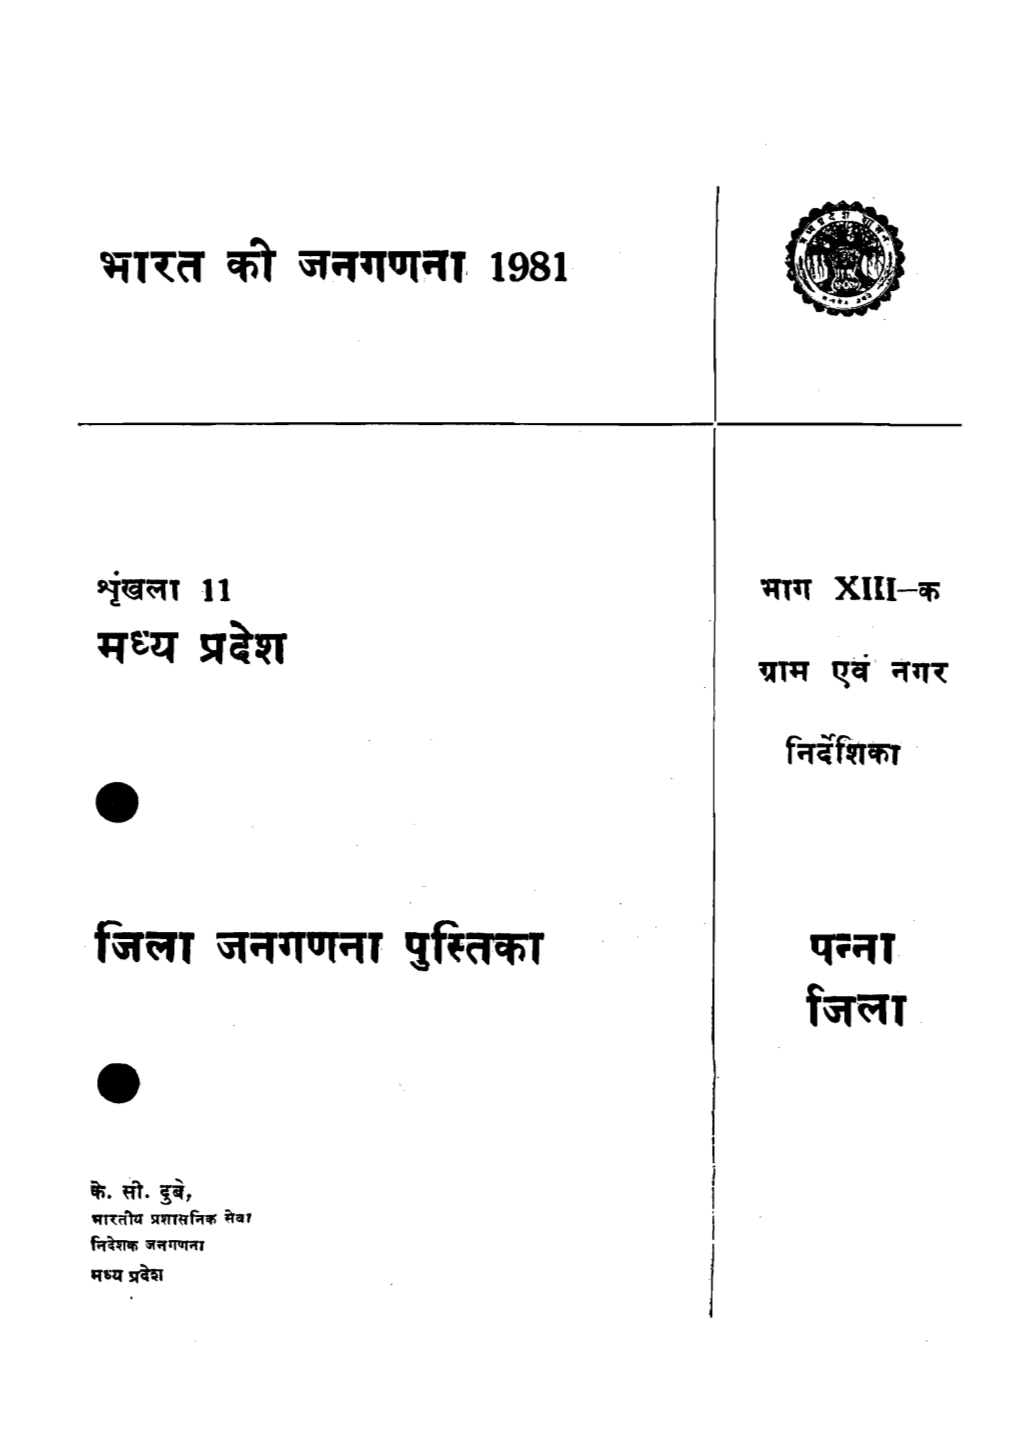 District Census Handbook, Panna, Part XIII-A, Series-11